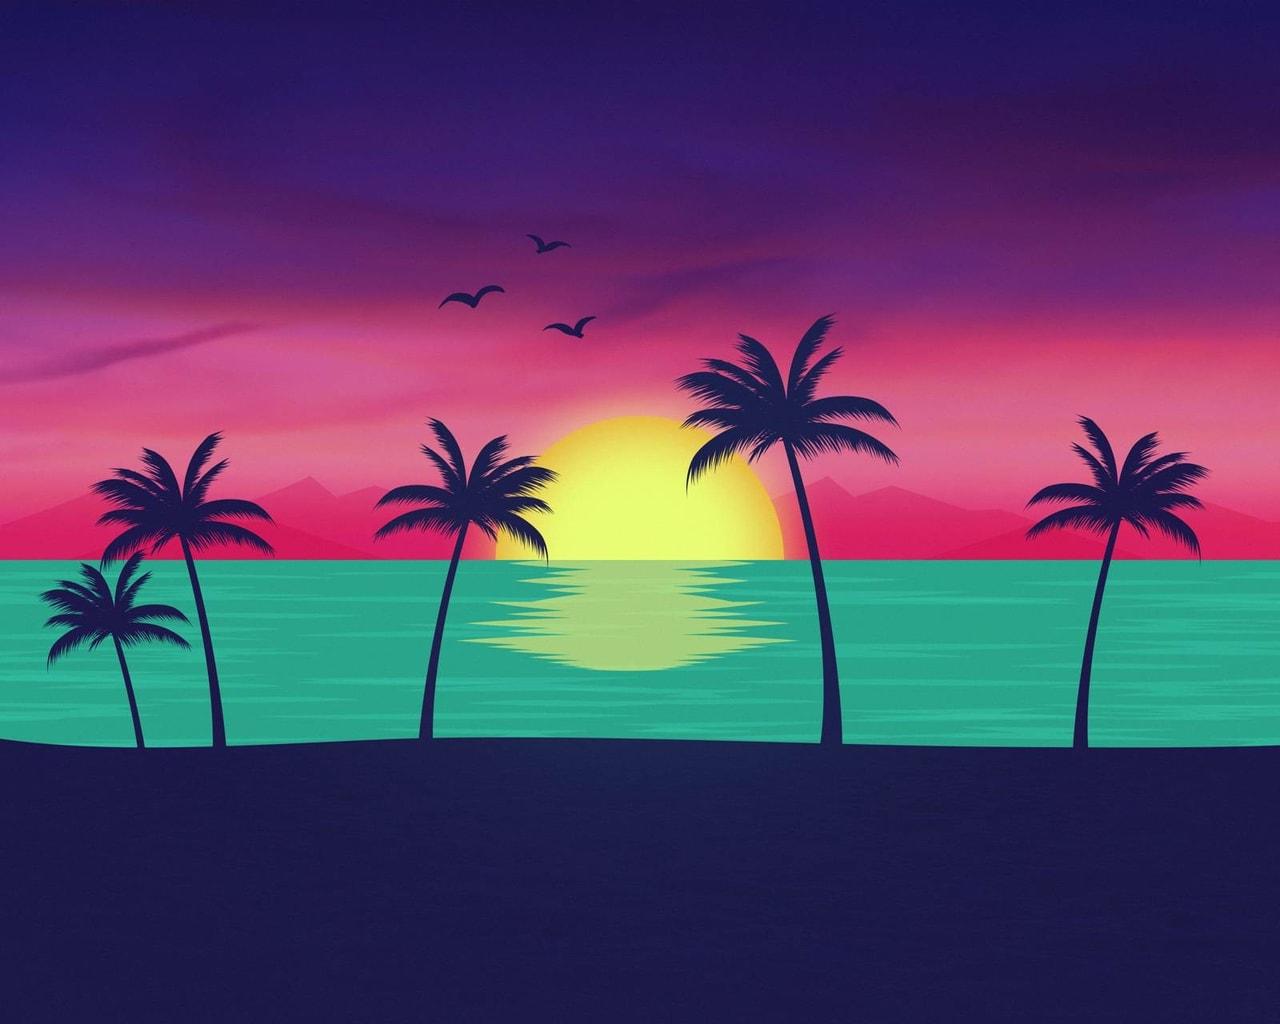 Cool Retro Looking Neon Beach Sunset Wallpaper Background